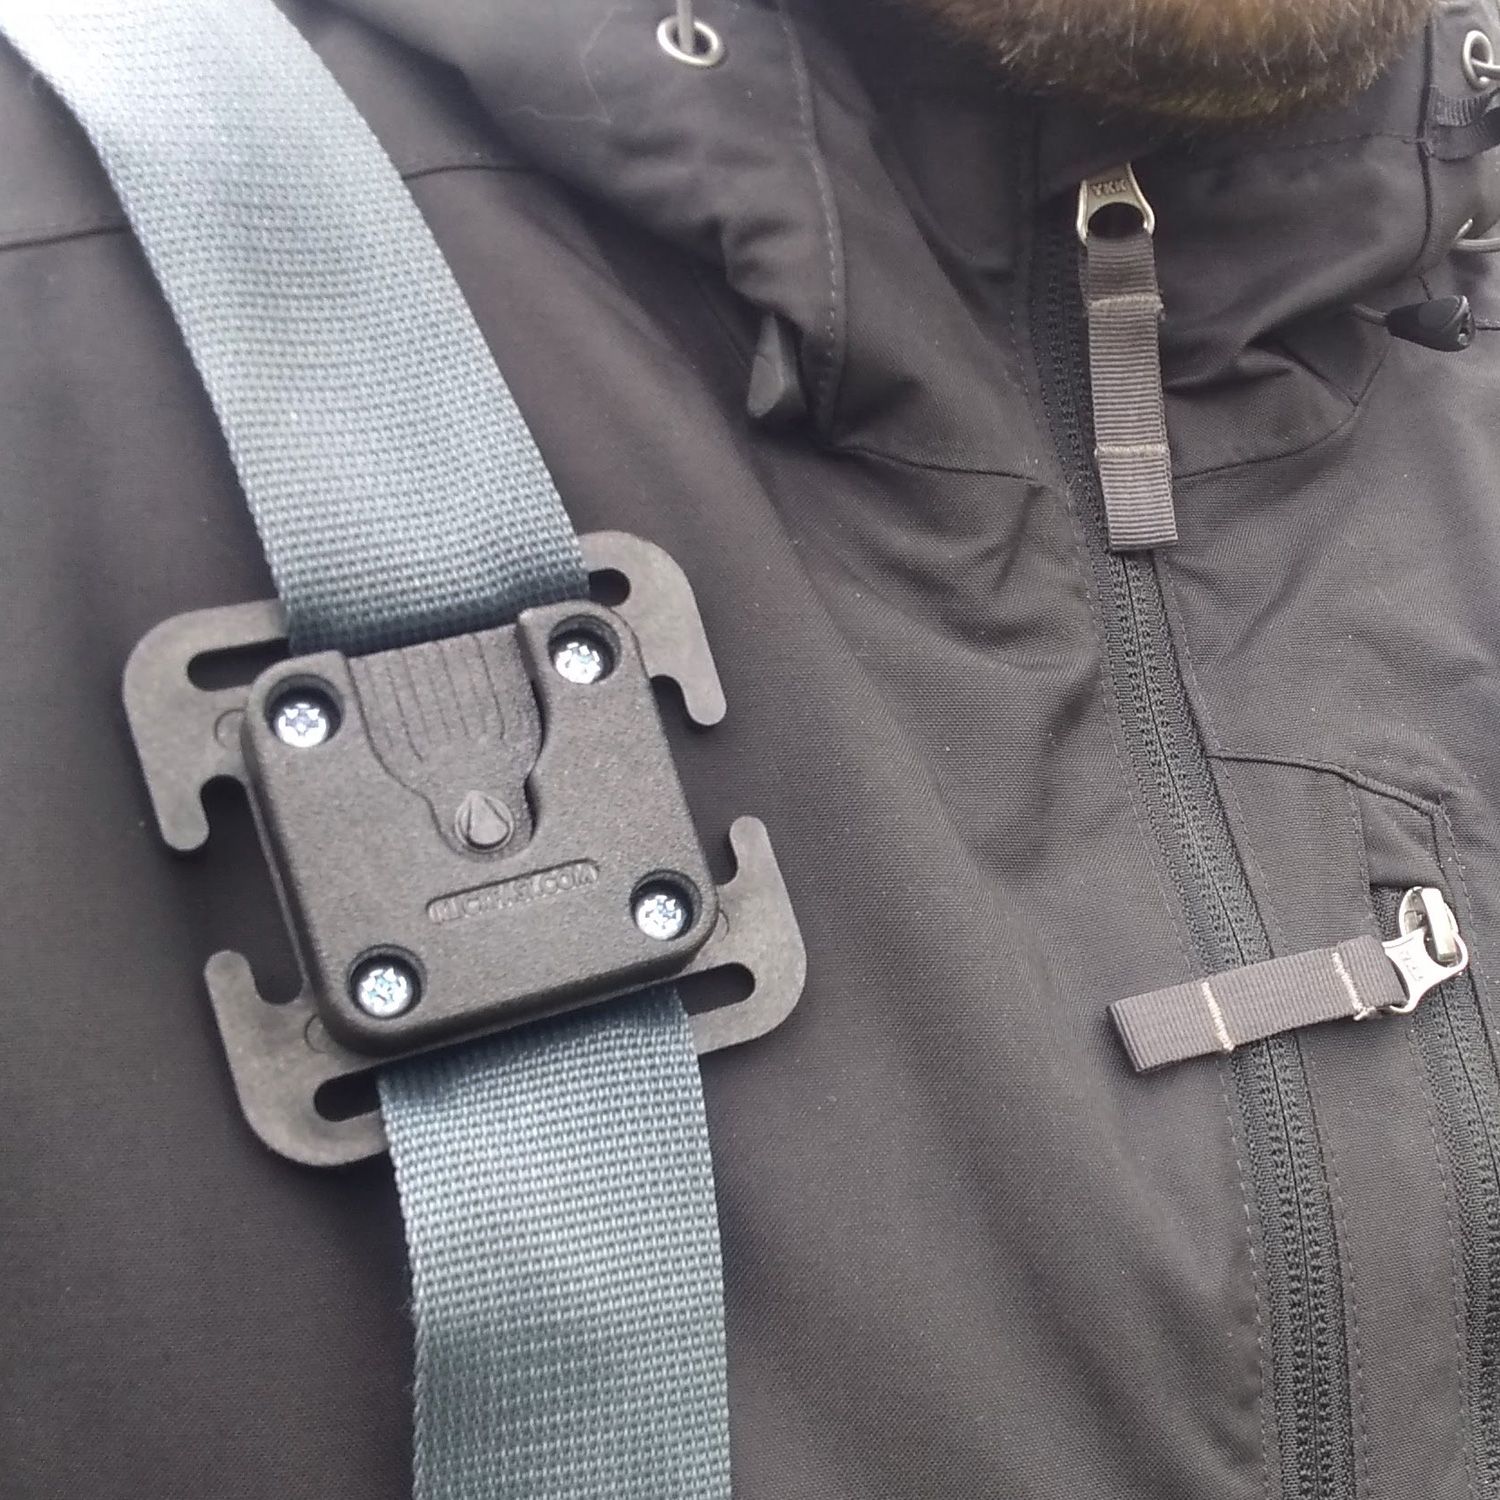  Clip On belt/strap 25mm to 50mm